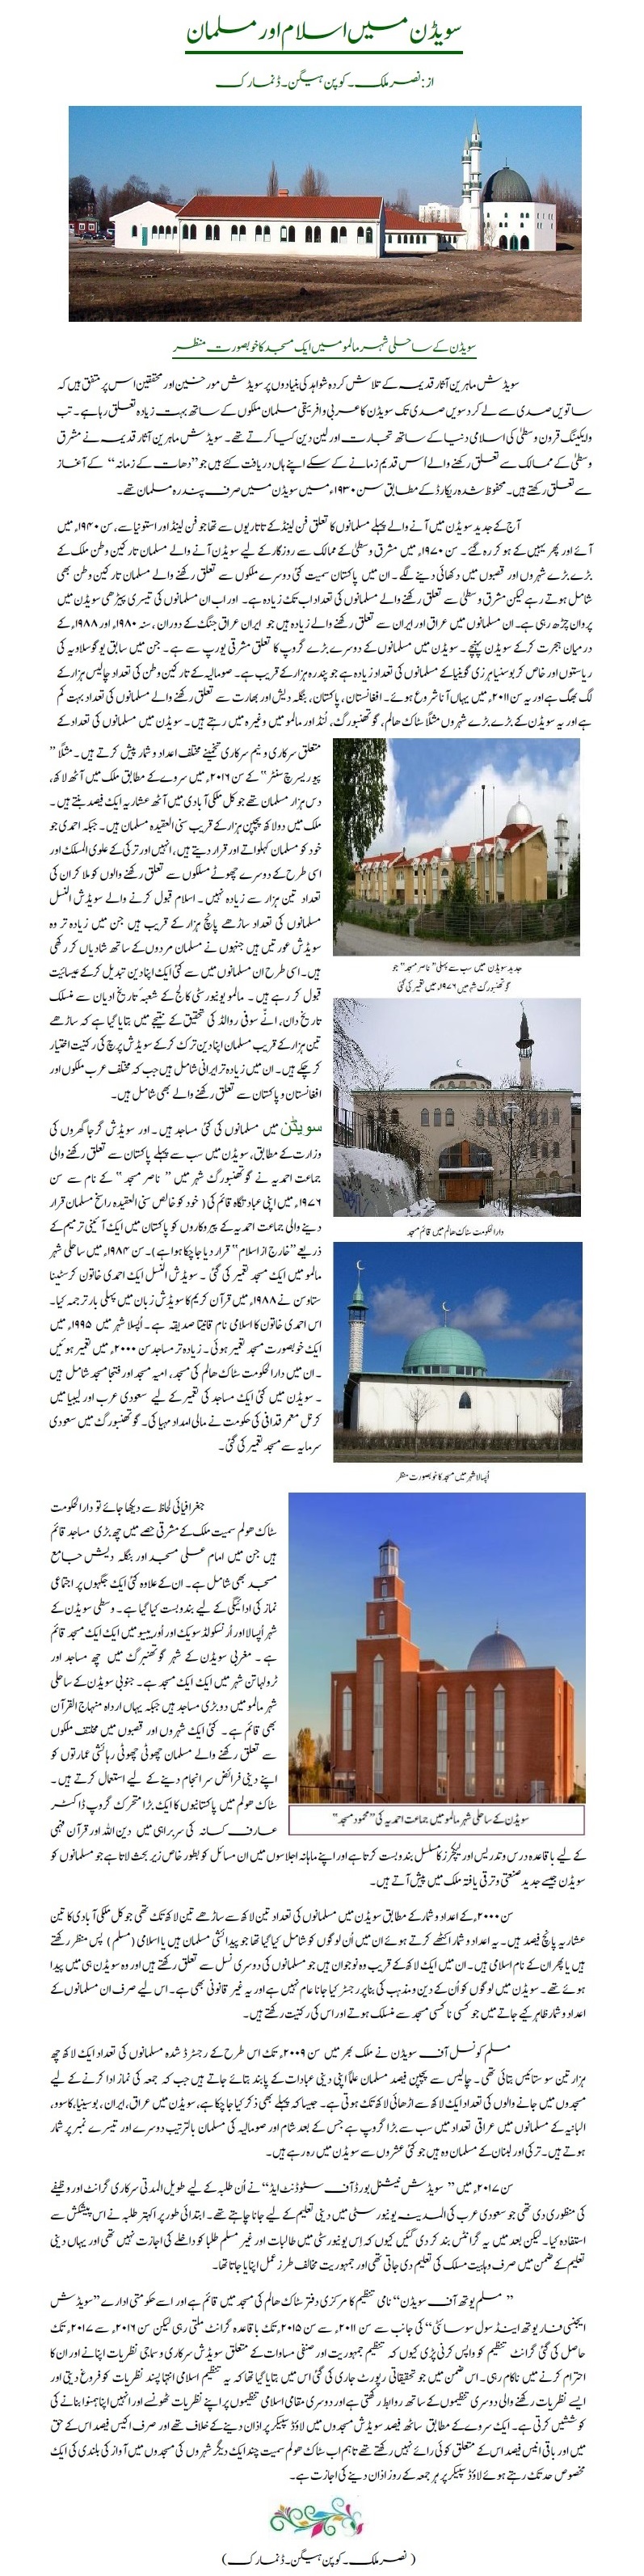 Islam_in_Sweden.jpg